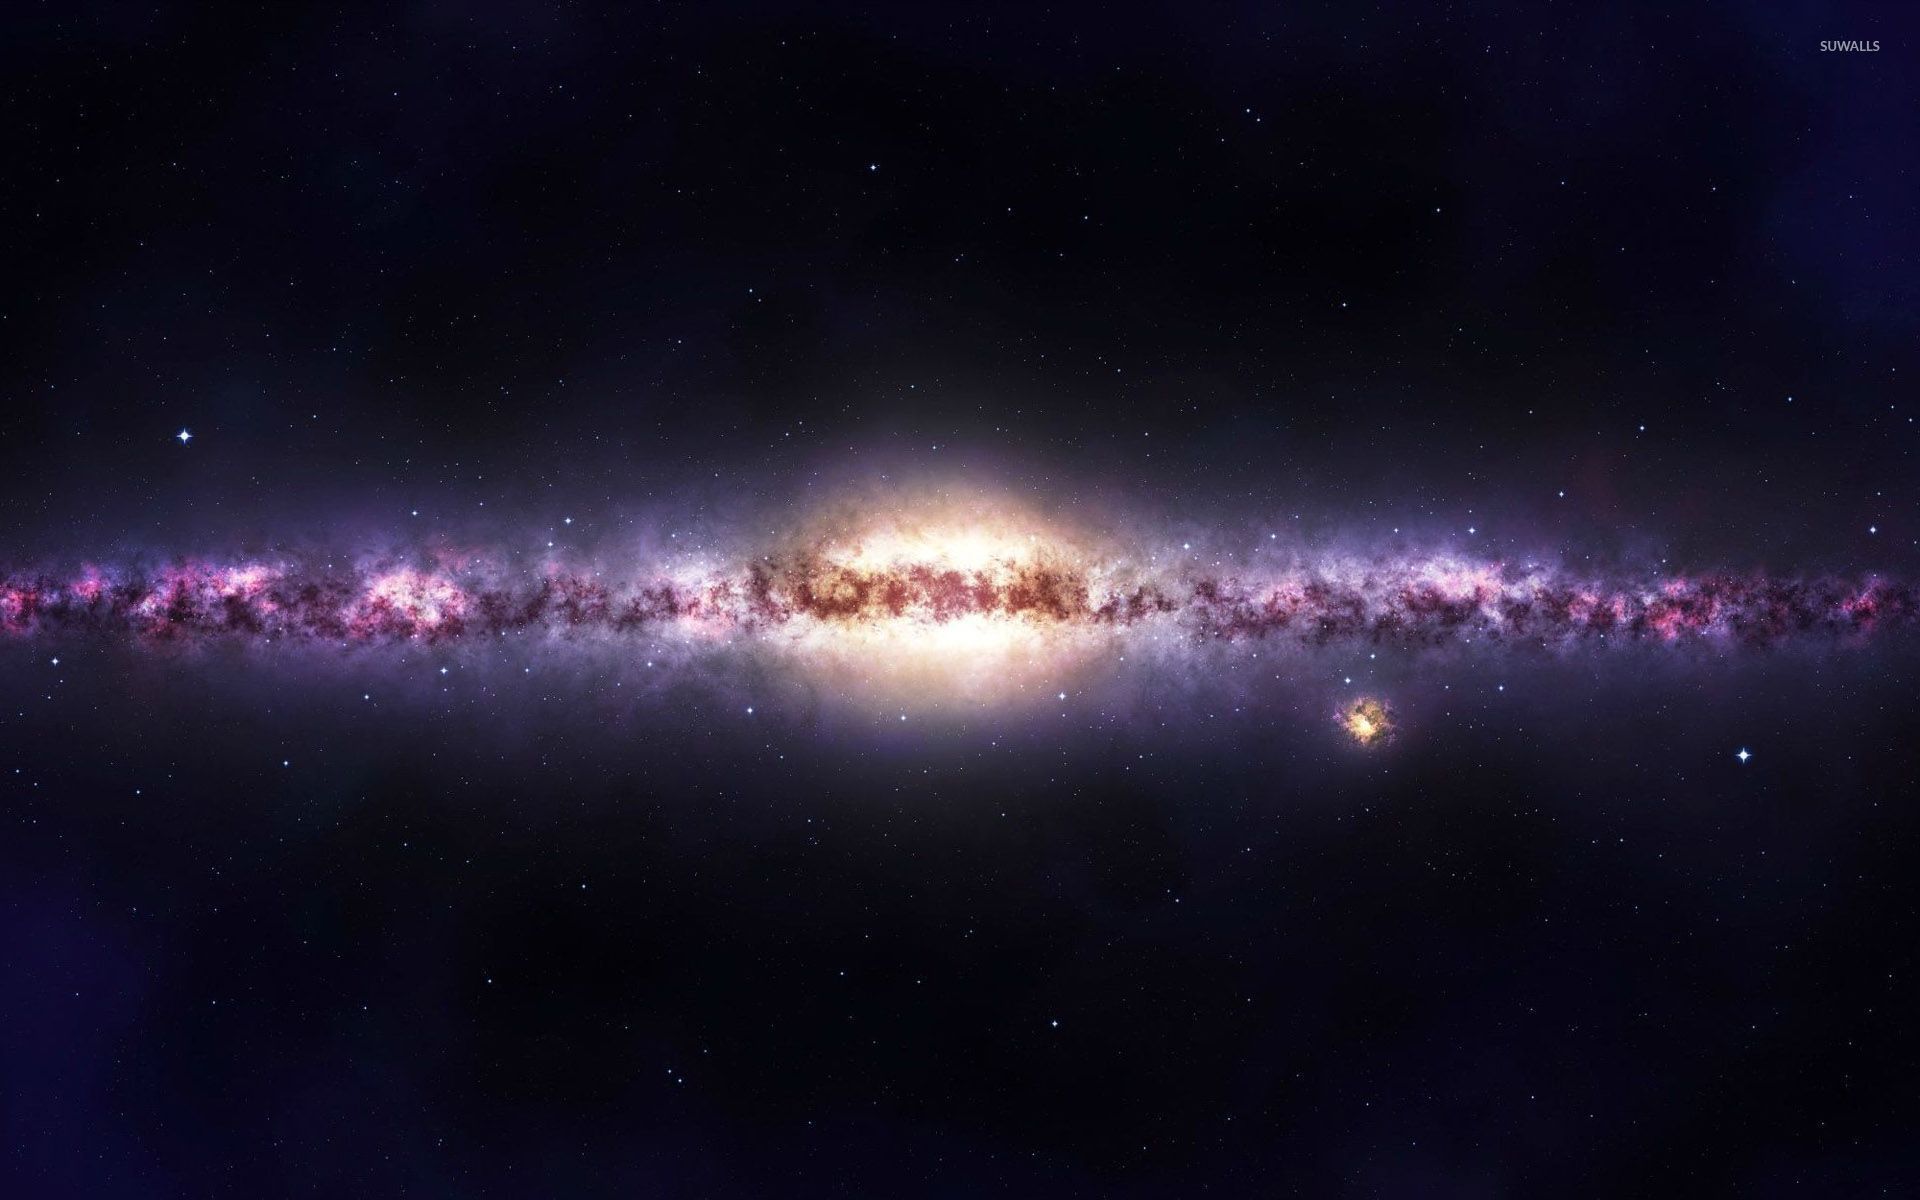 galaxy live wallpaper